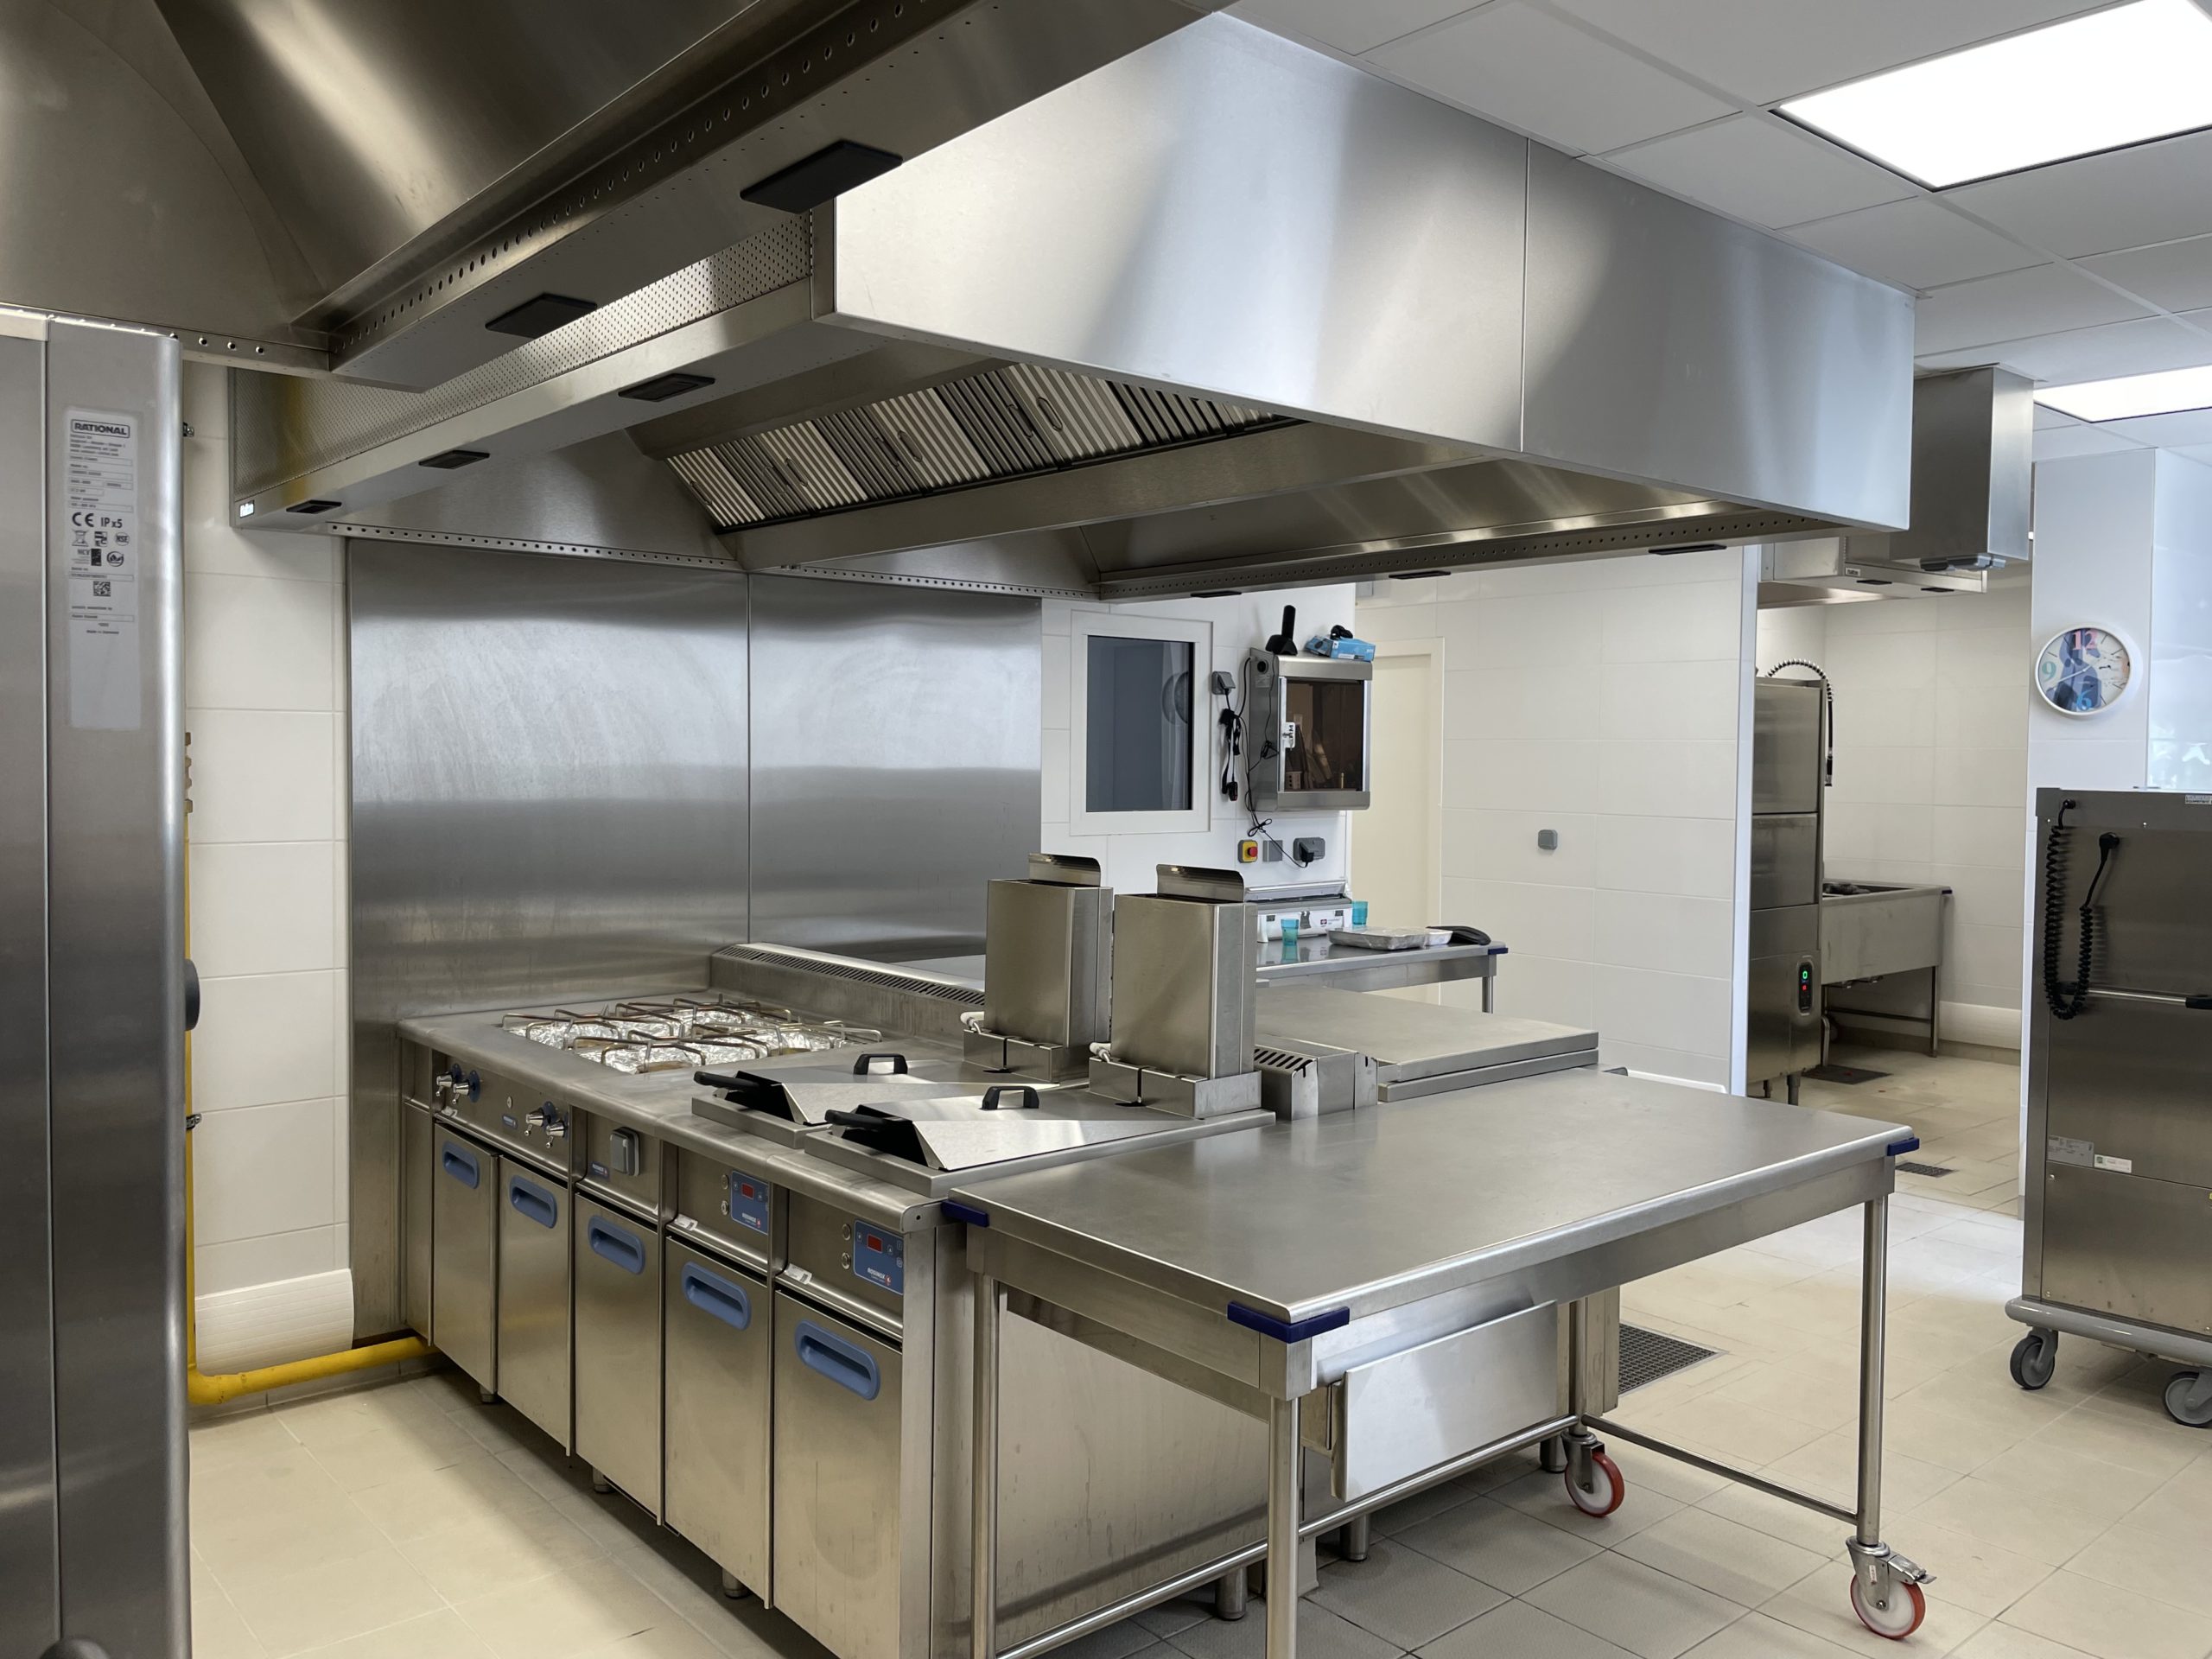 Jean de Cruzel School has chosen Halton Solution for the ventilation of their kitchen